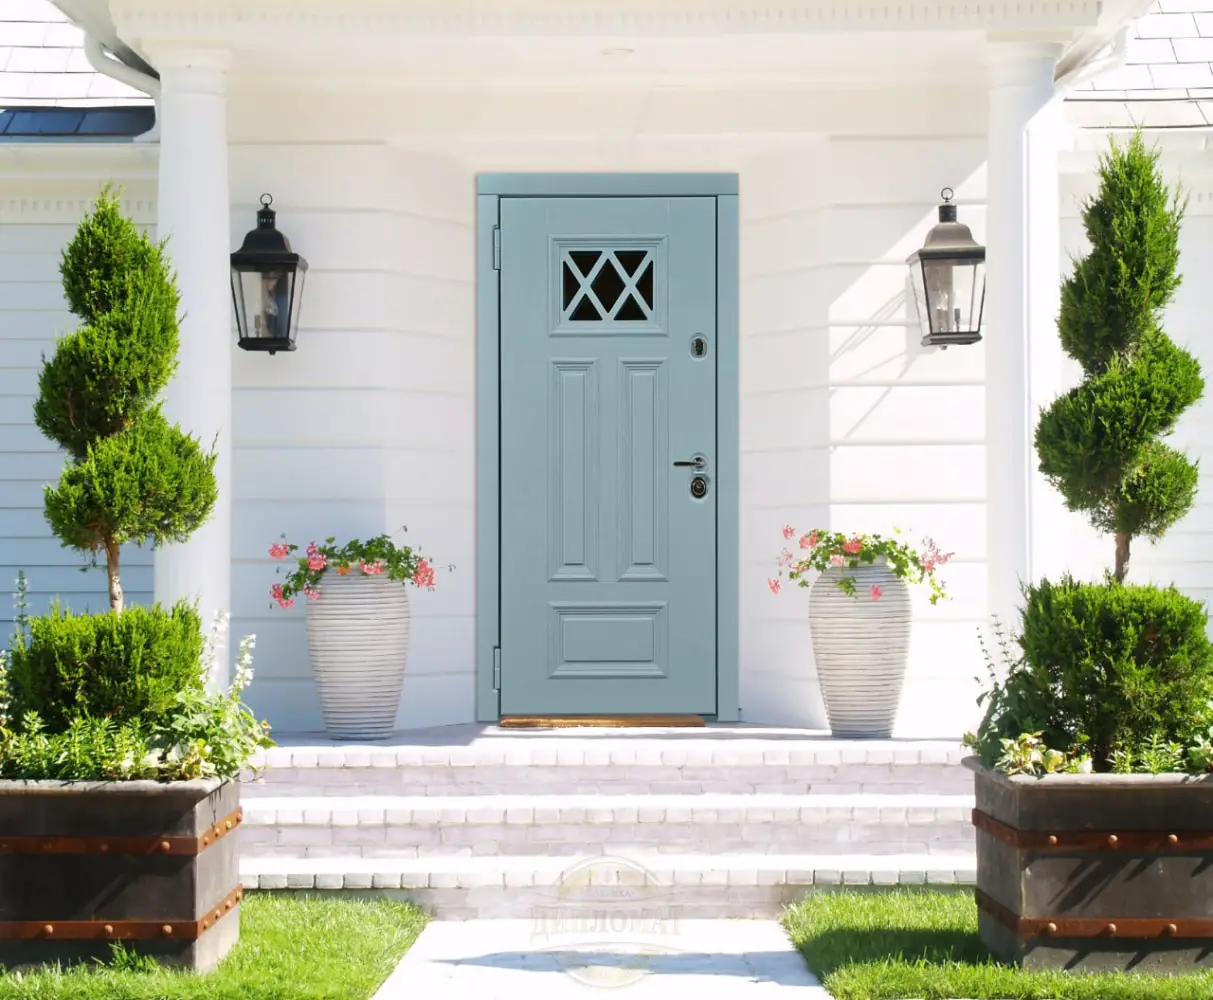 How To Fix A Mobile Home Exterior Door